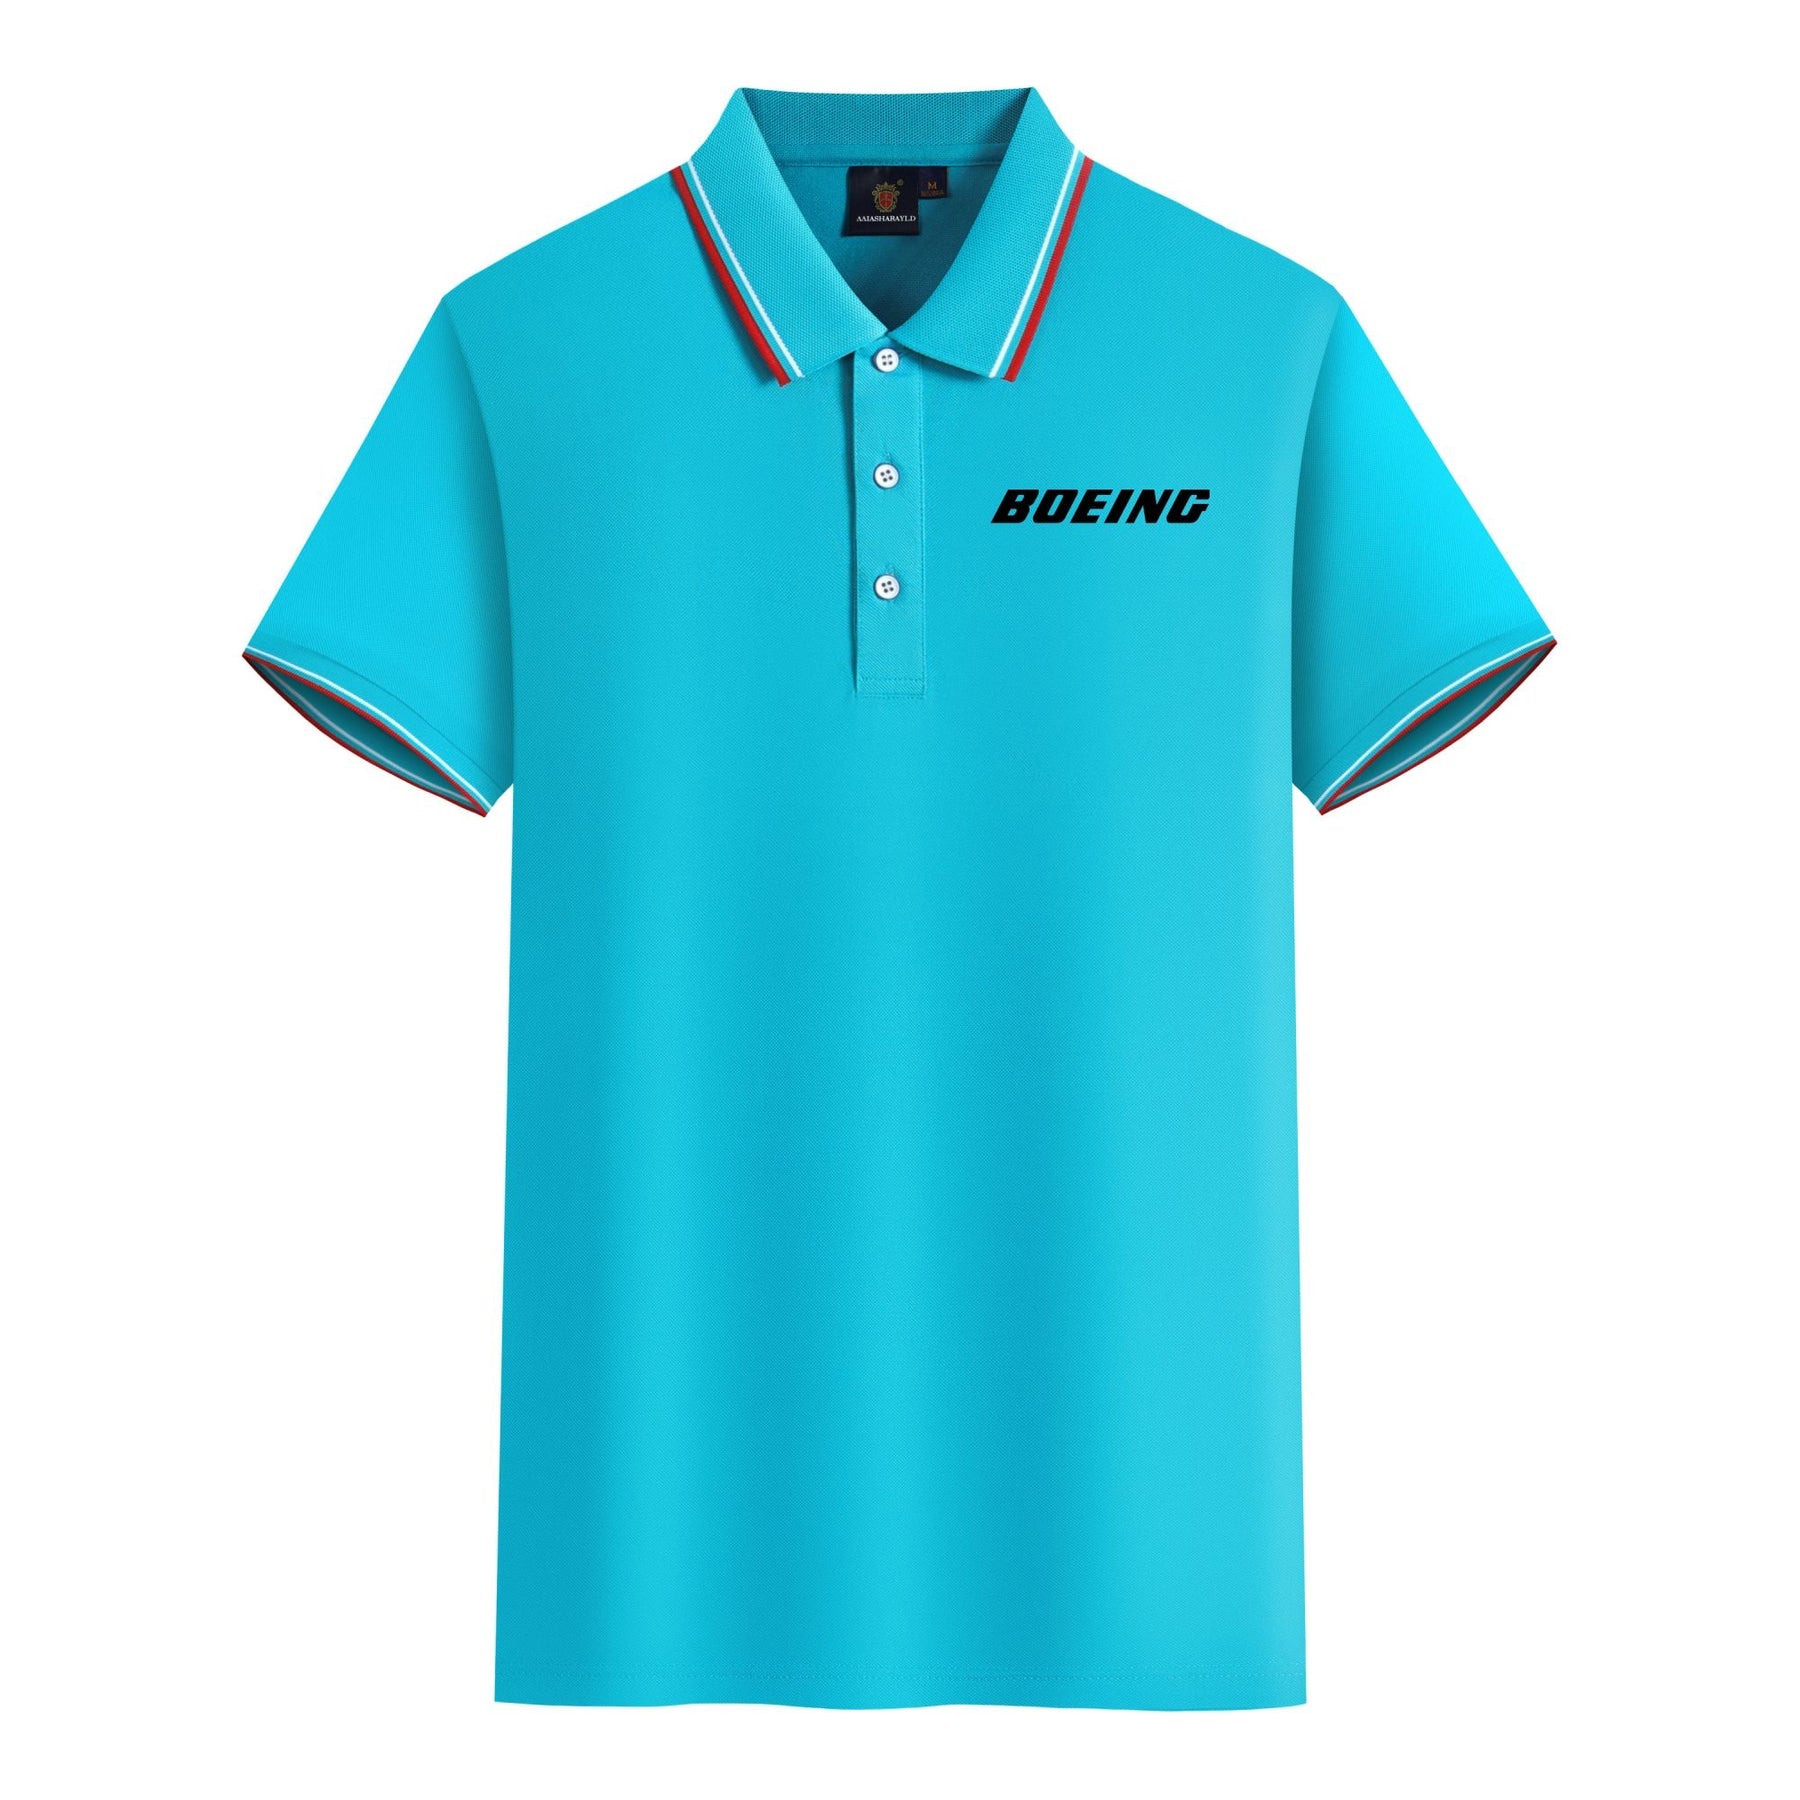 Boeing & Text Designed Stylish Polo T-Shirts